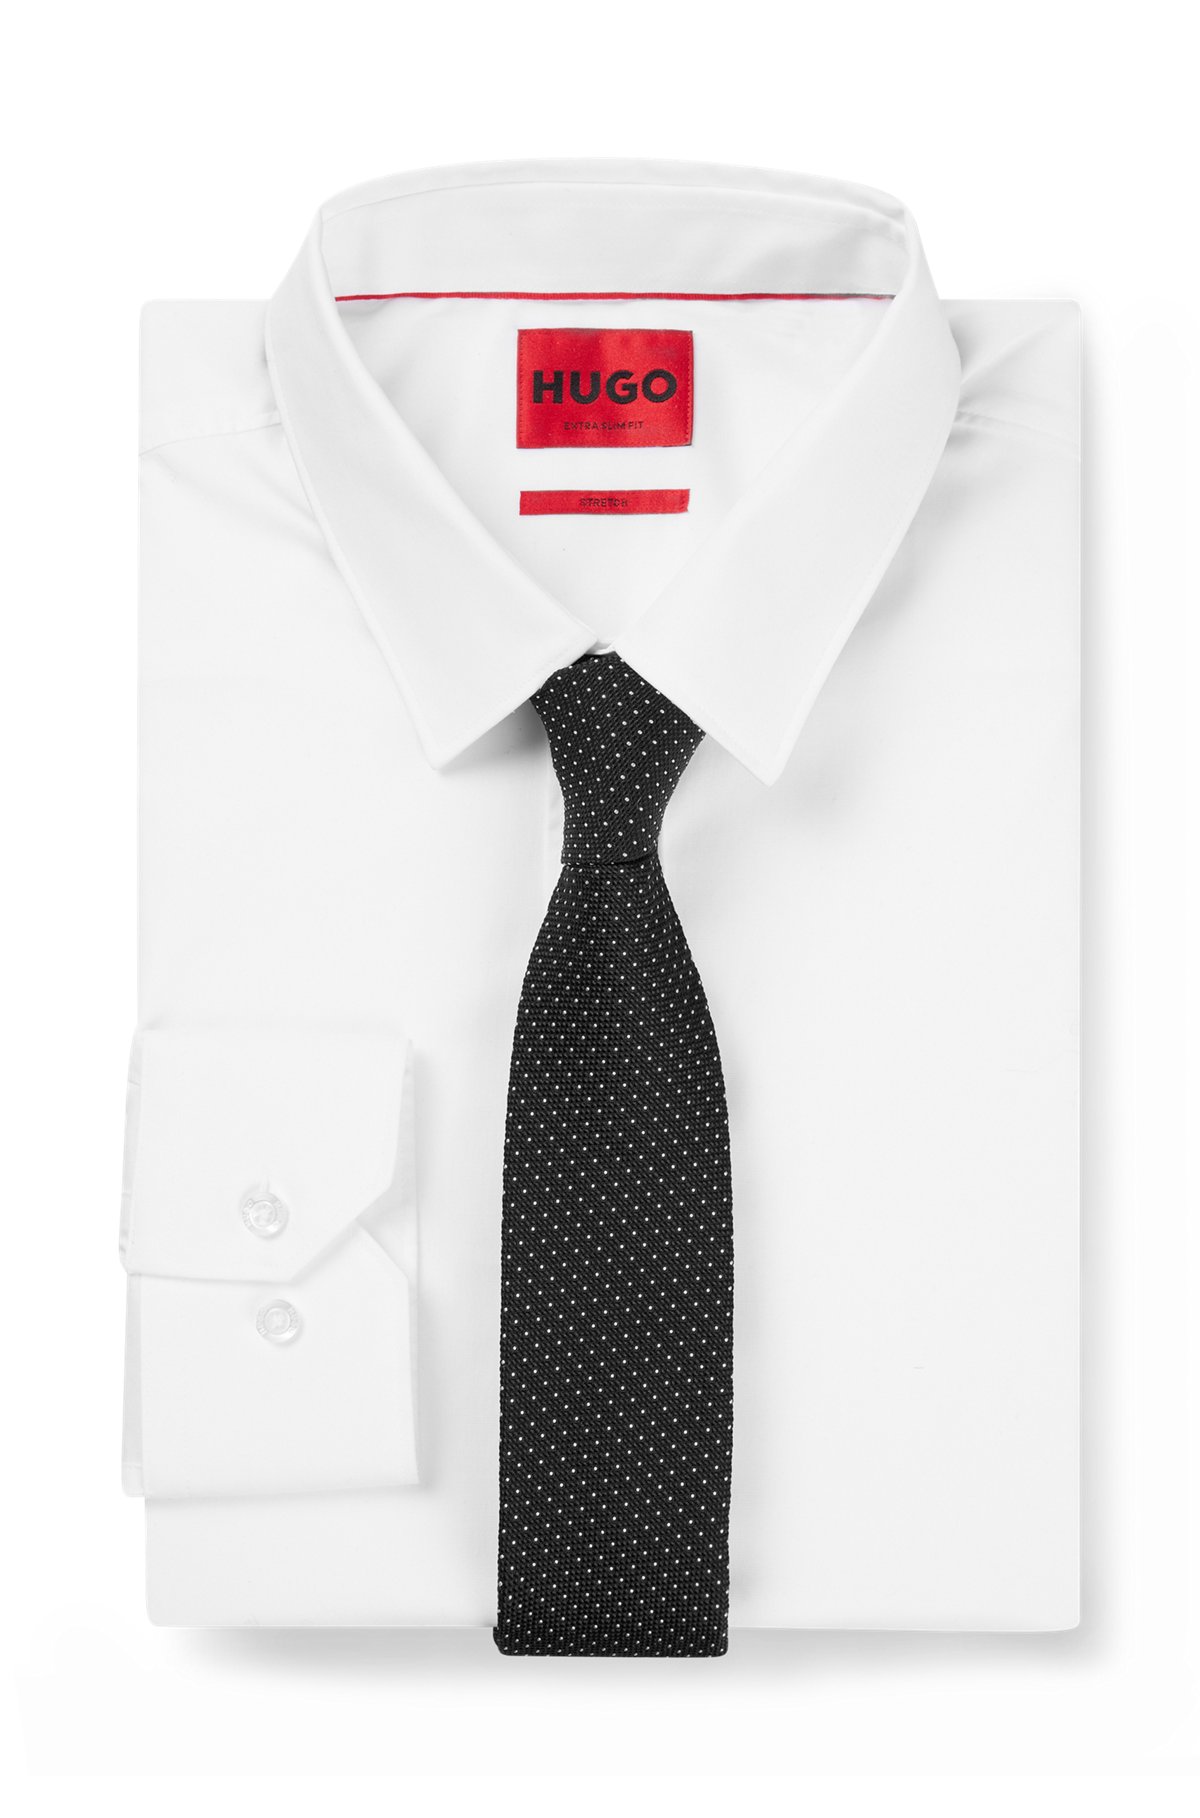 HUGO - Krawatte aus reiner Seide mit Jacquard-Muster